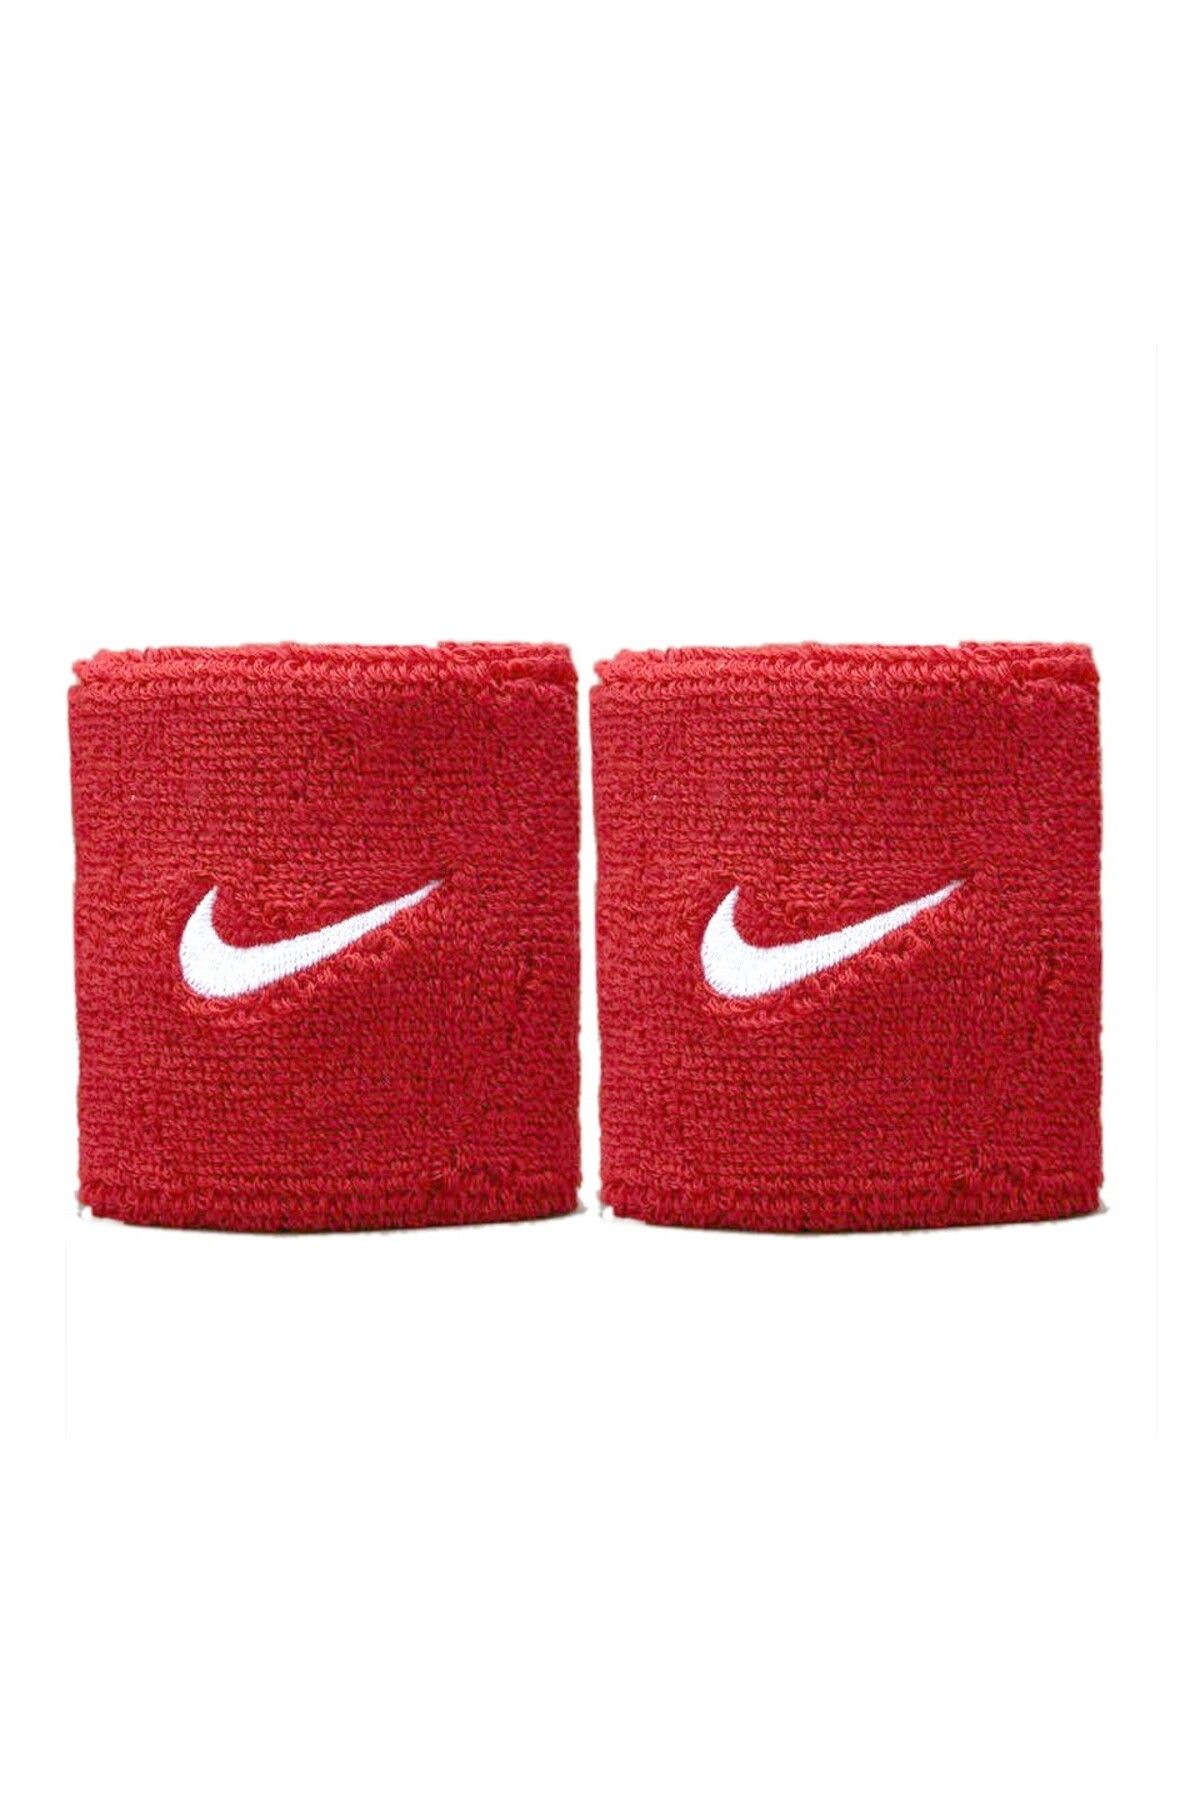 Nike Swoosh Wristbands 2 Pk Varssty Red/white Osfm,one Size/5